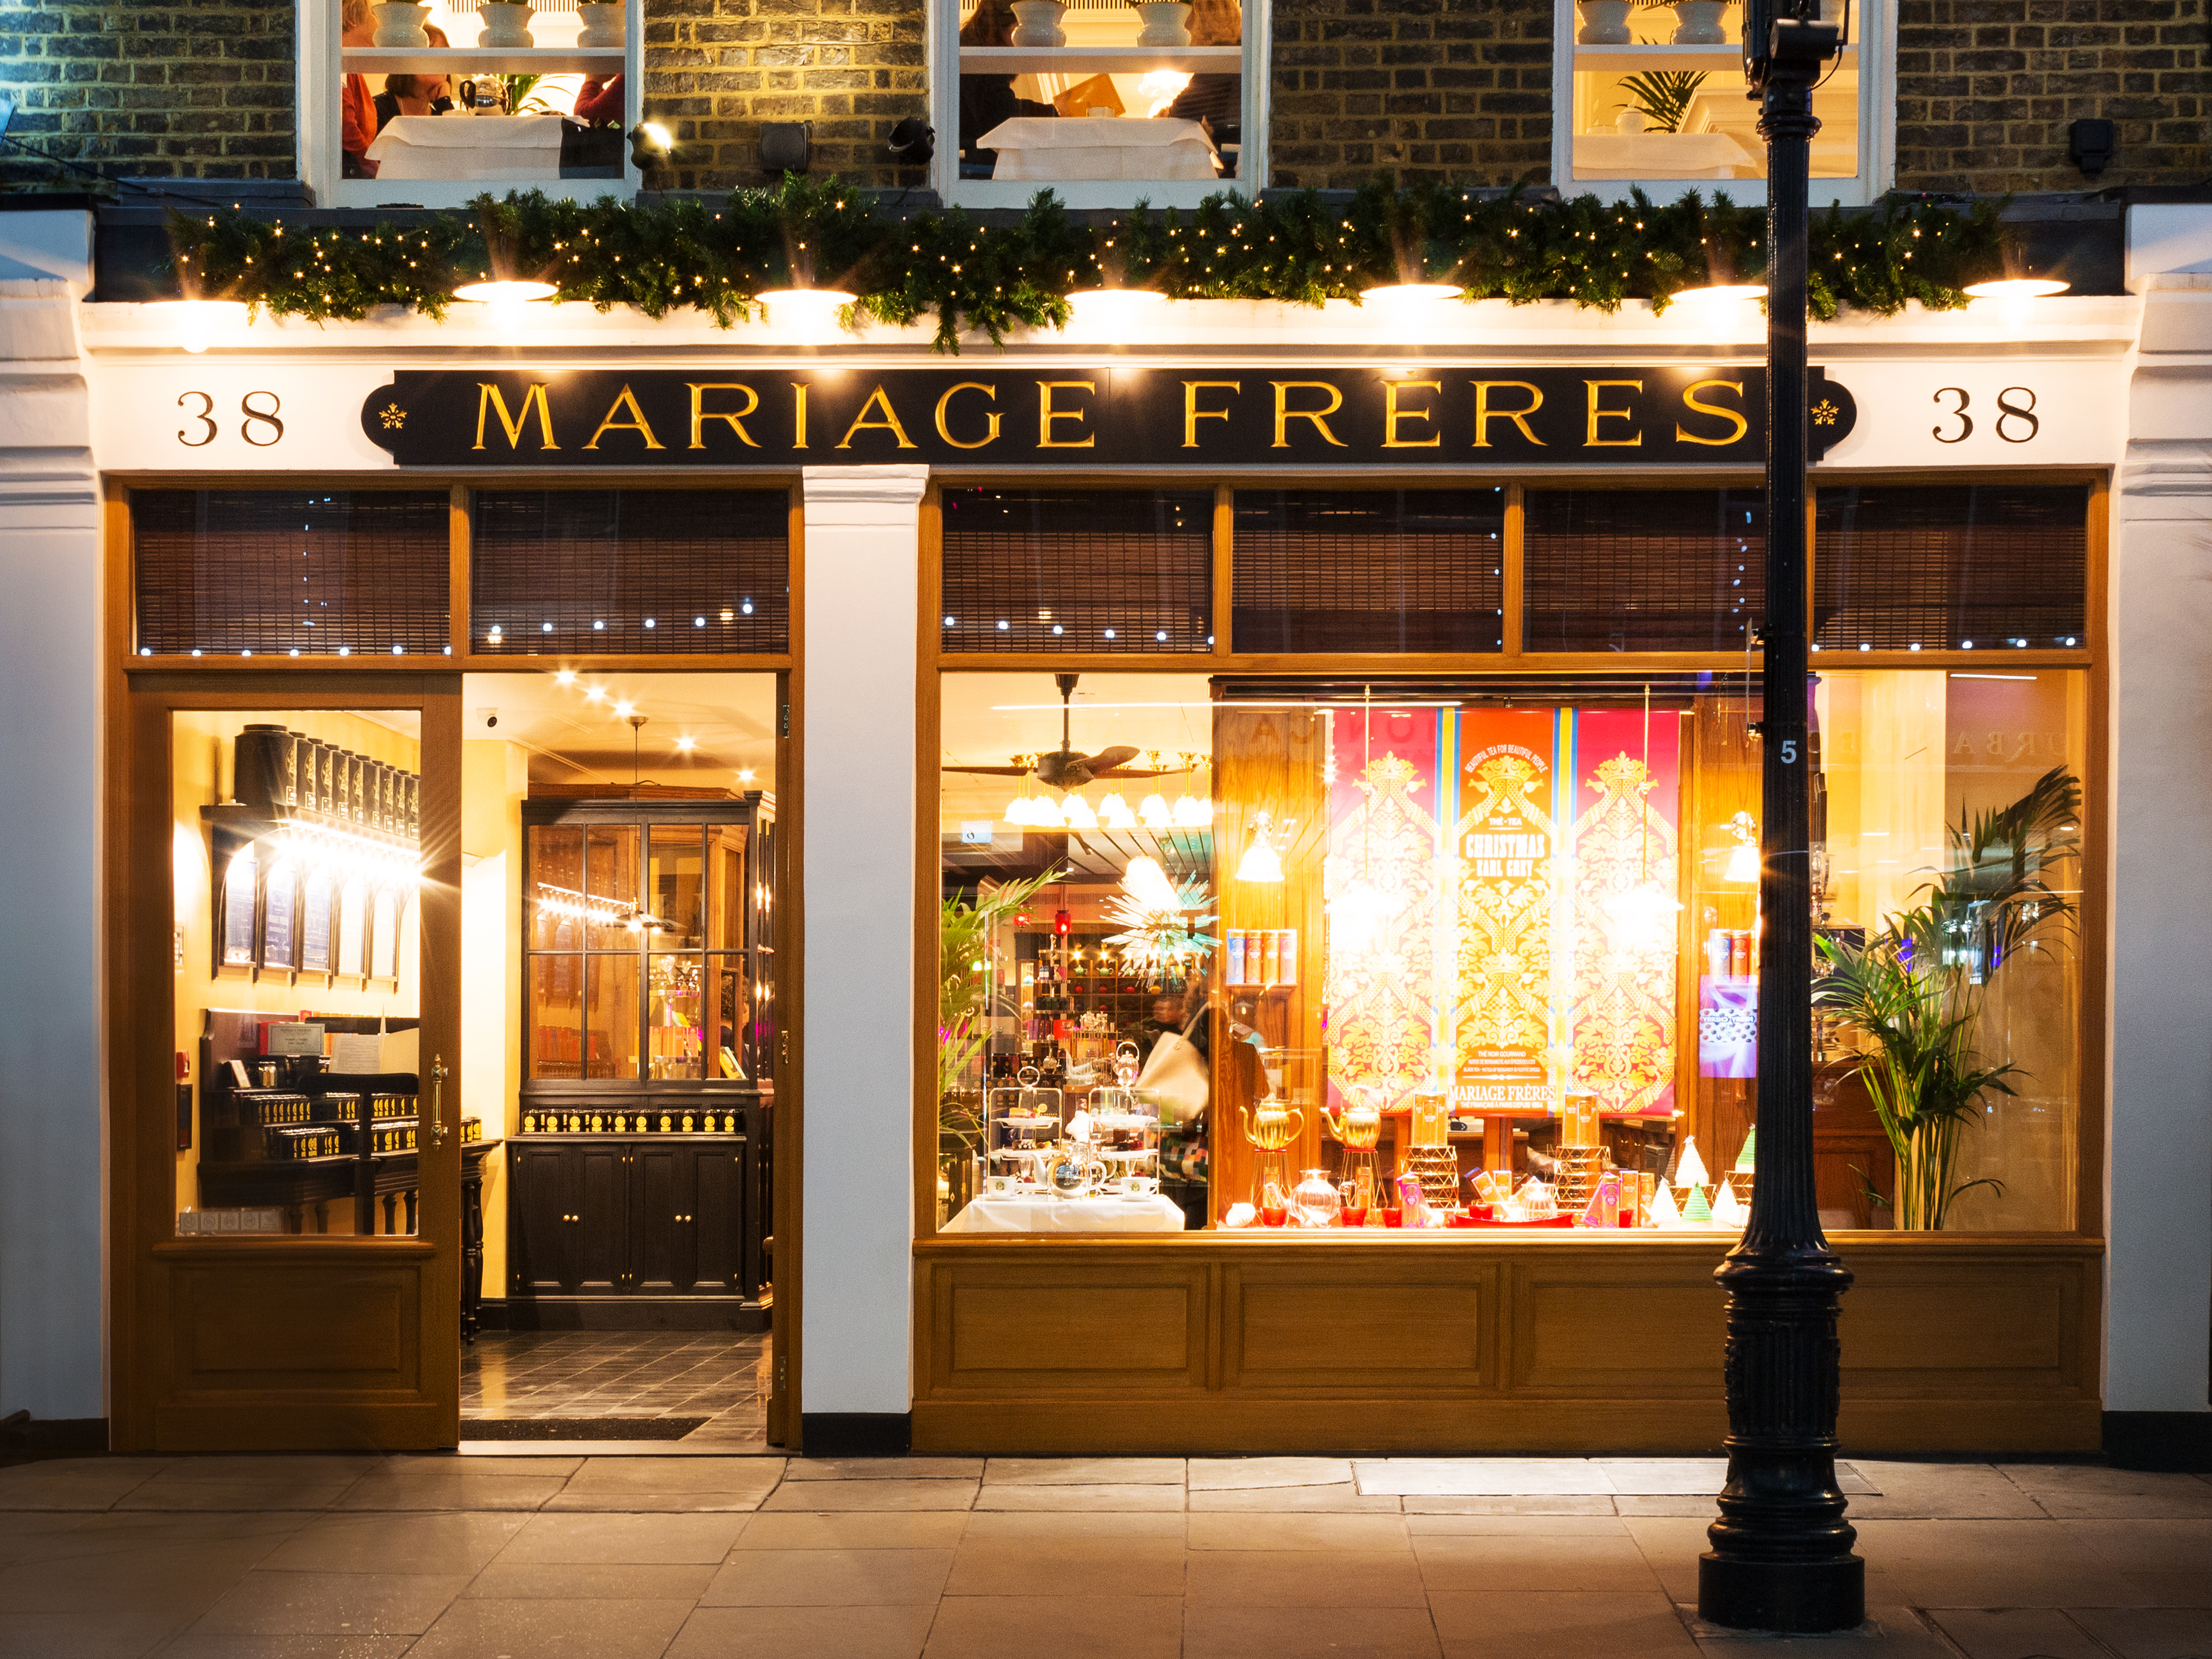 Mariage Freres London, United Kingdom - Last Updated September